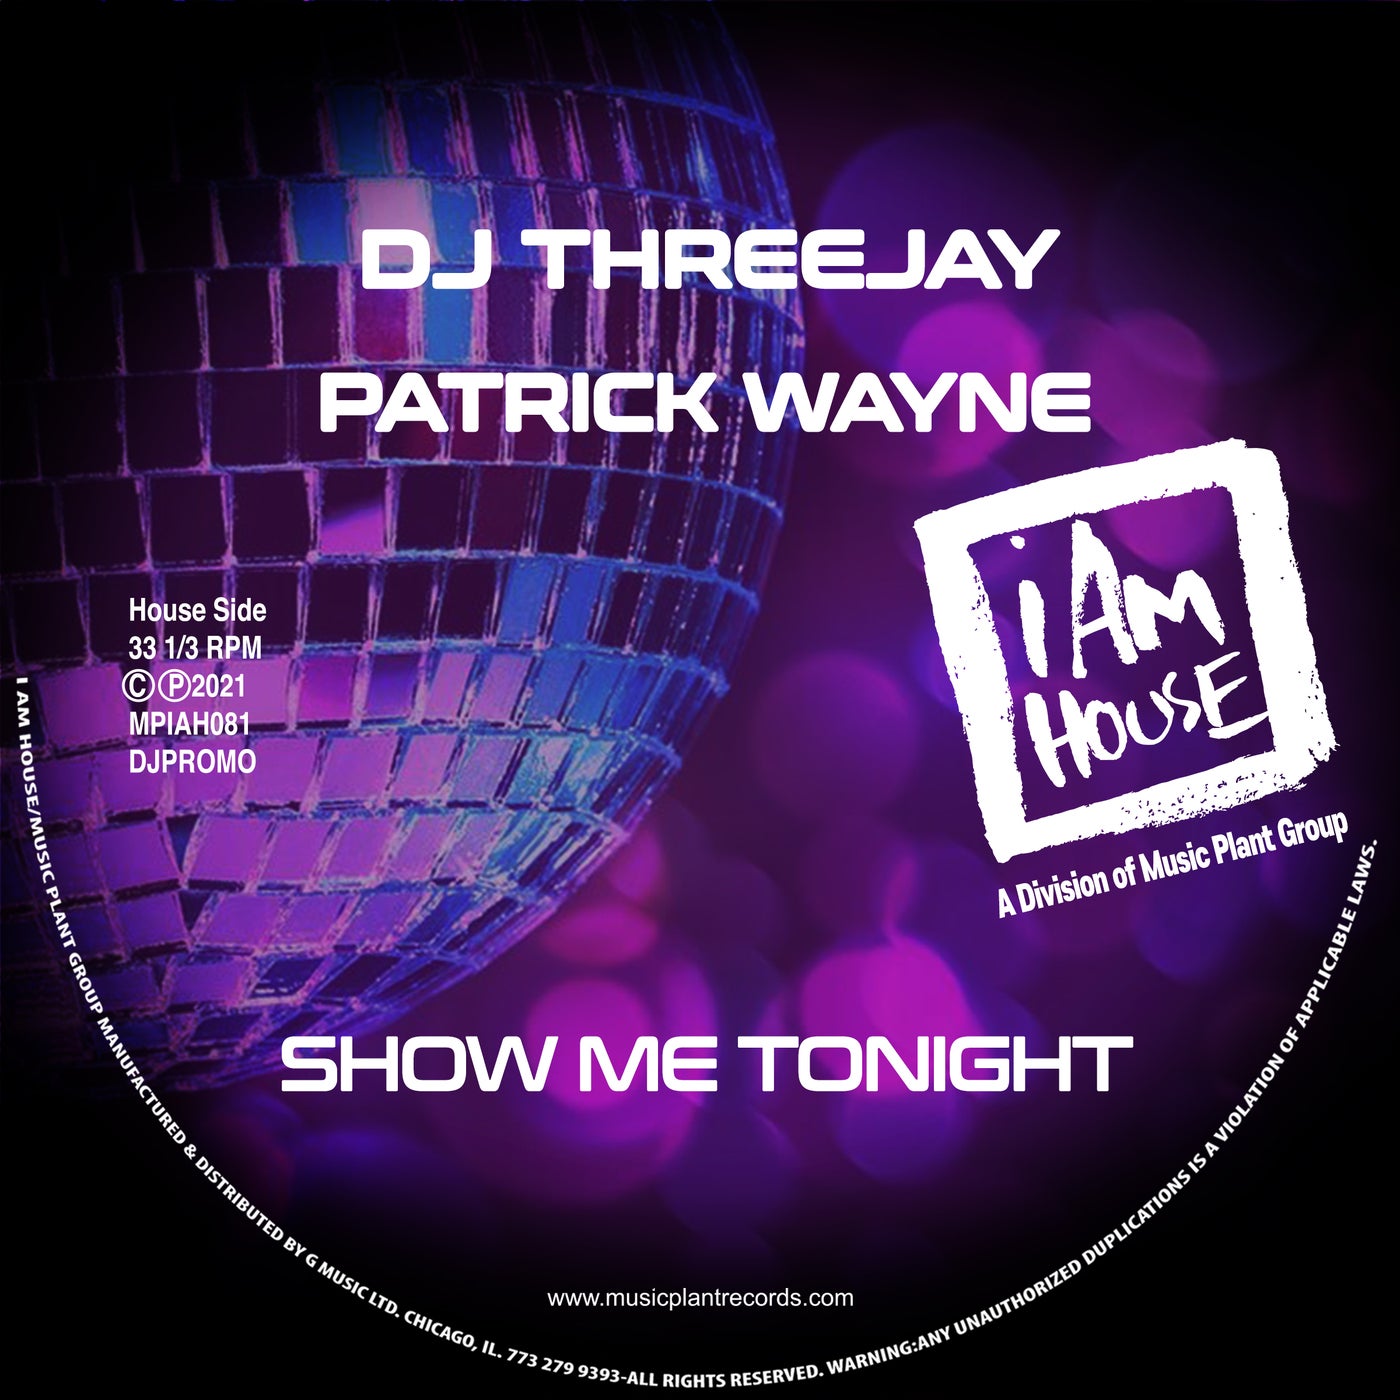 Dj Threejay & Patrick Wayne - Show Me Tonight [Music Plant Group]